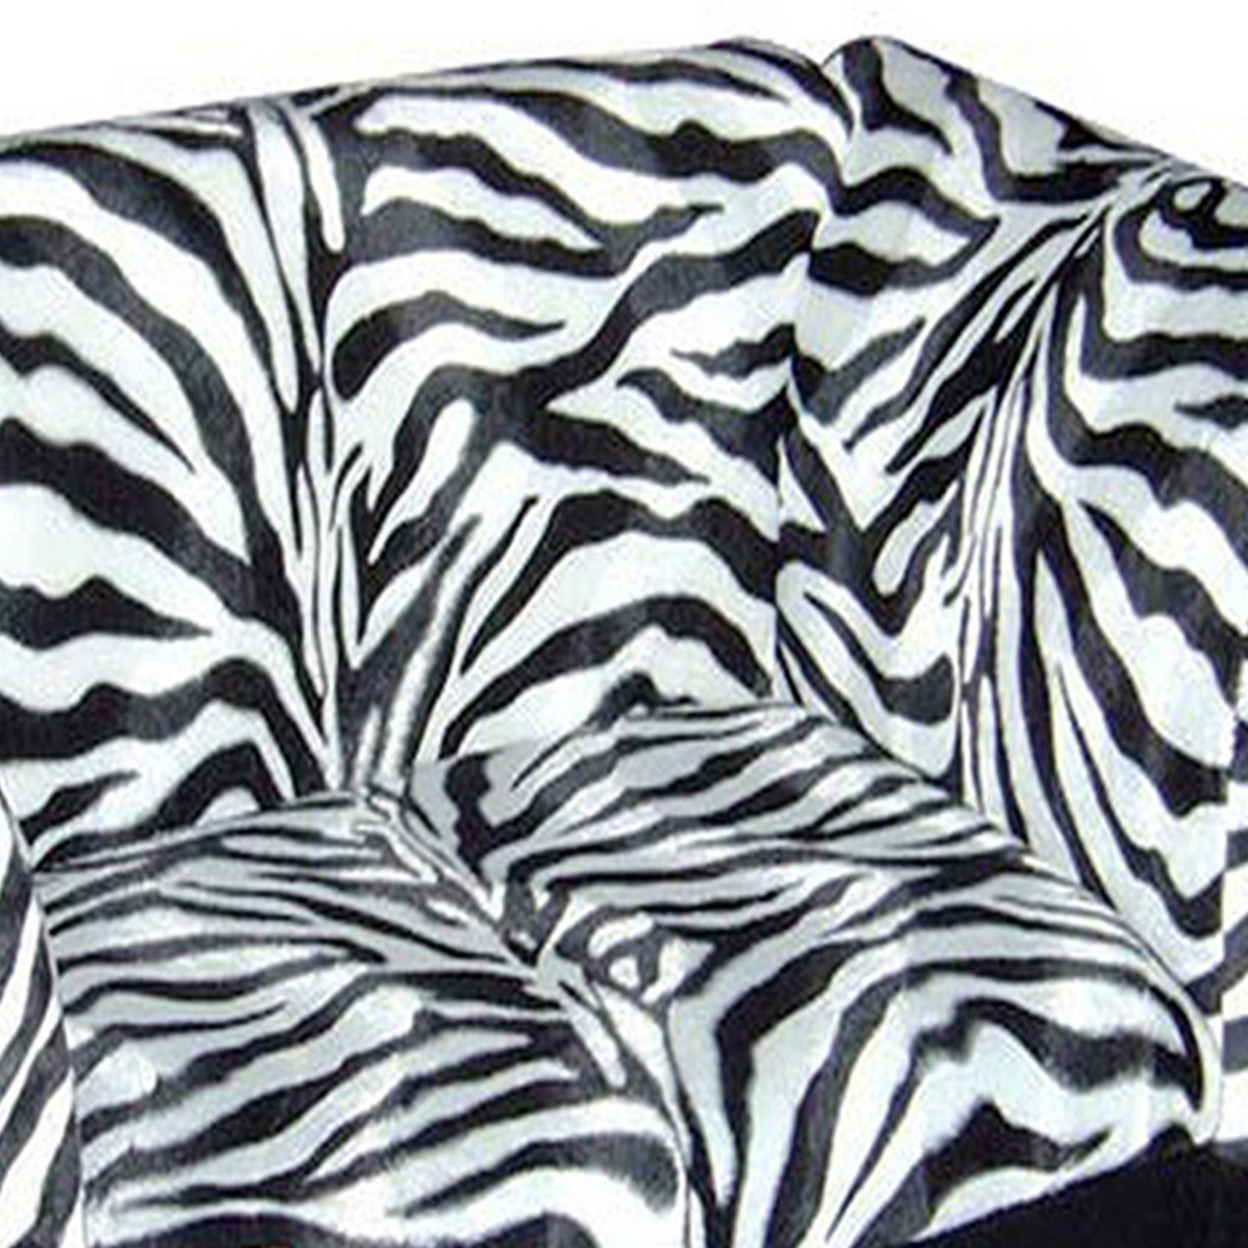 Sofa Pet Bed With Zebra Print Fabric And Storage, White And Black- Saltoro Sherpi